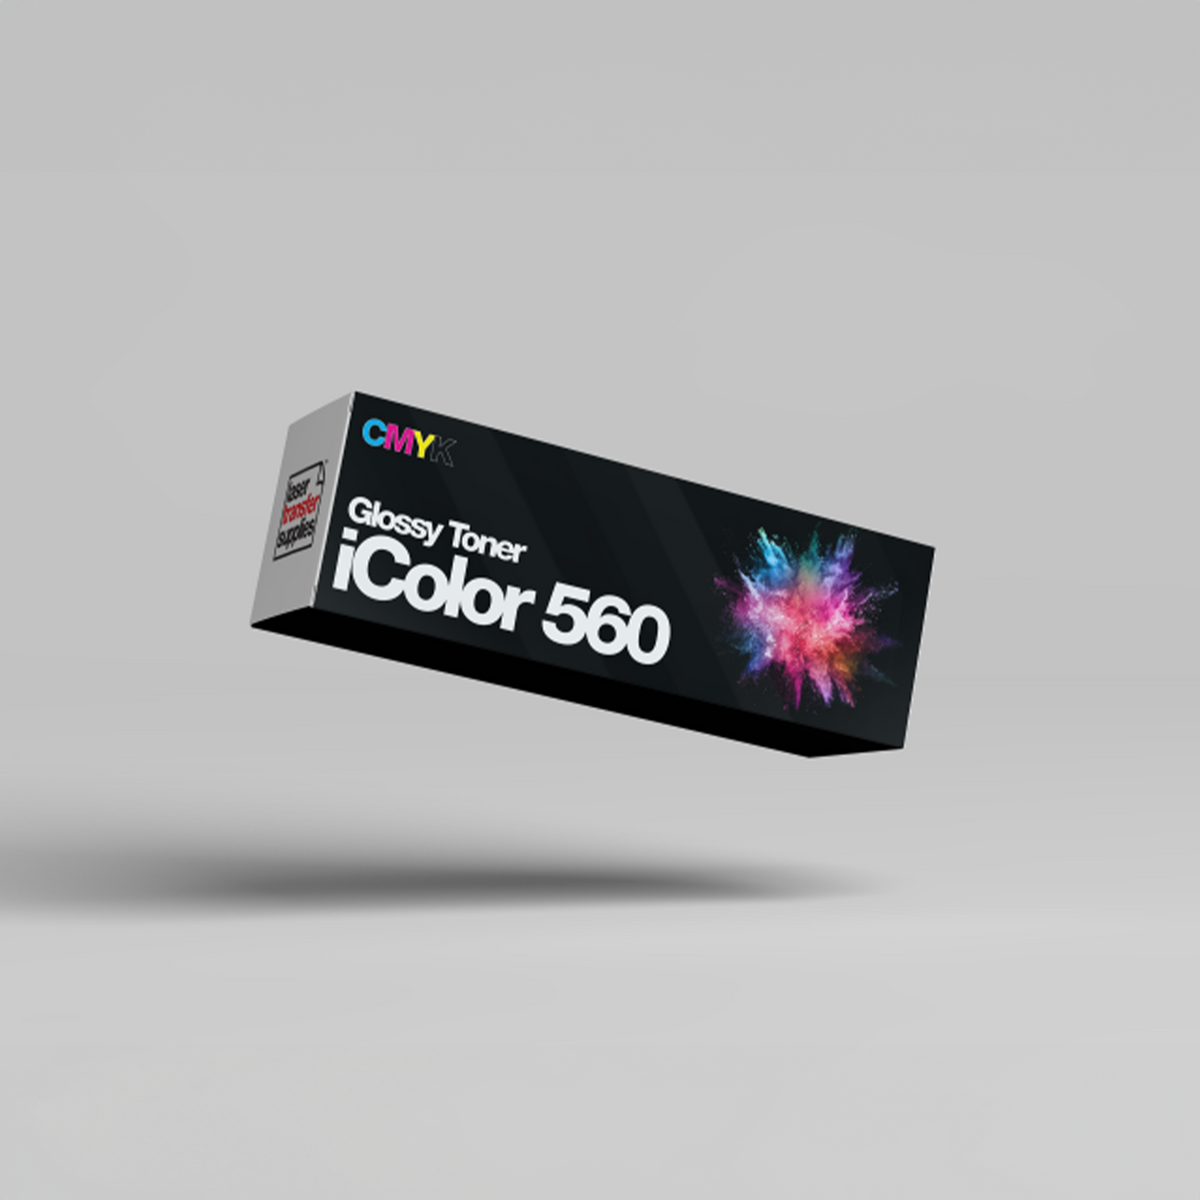 IColor 560 Glossy Toner